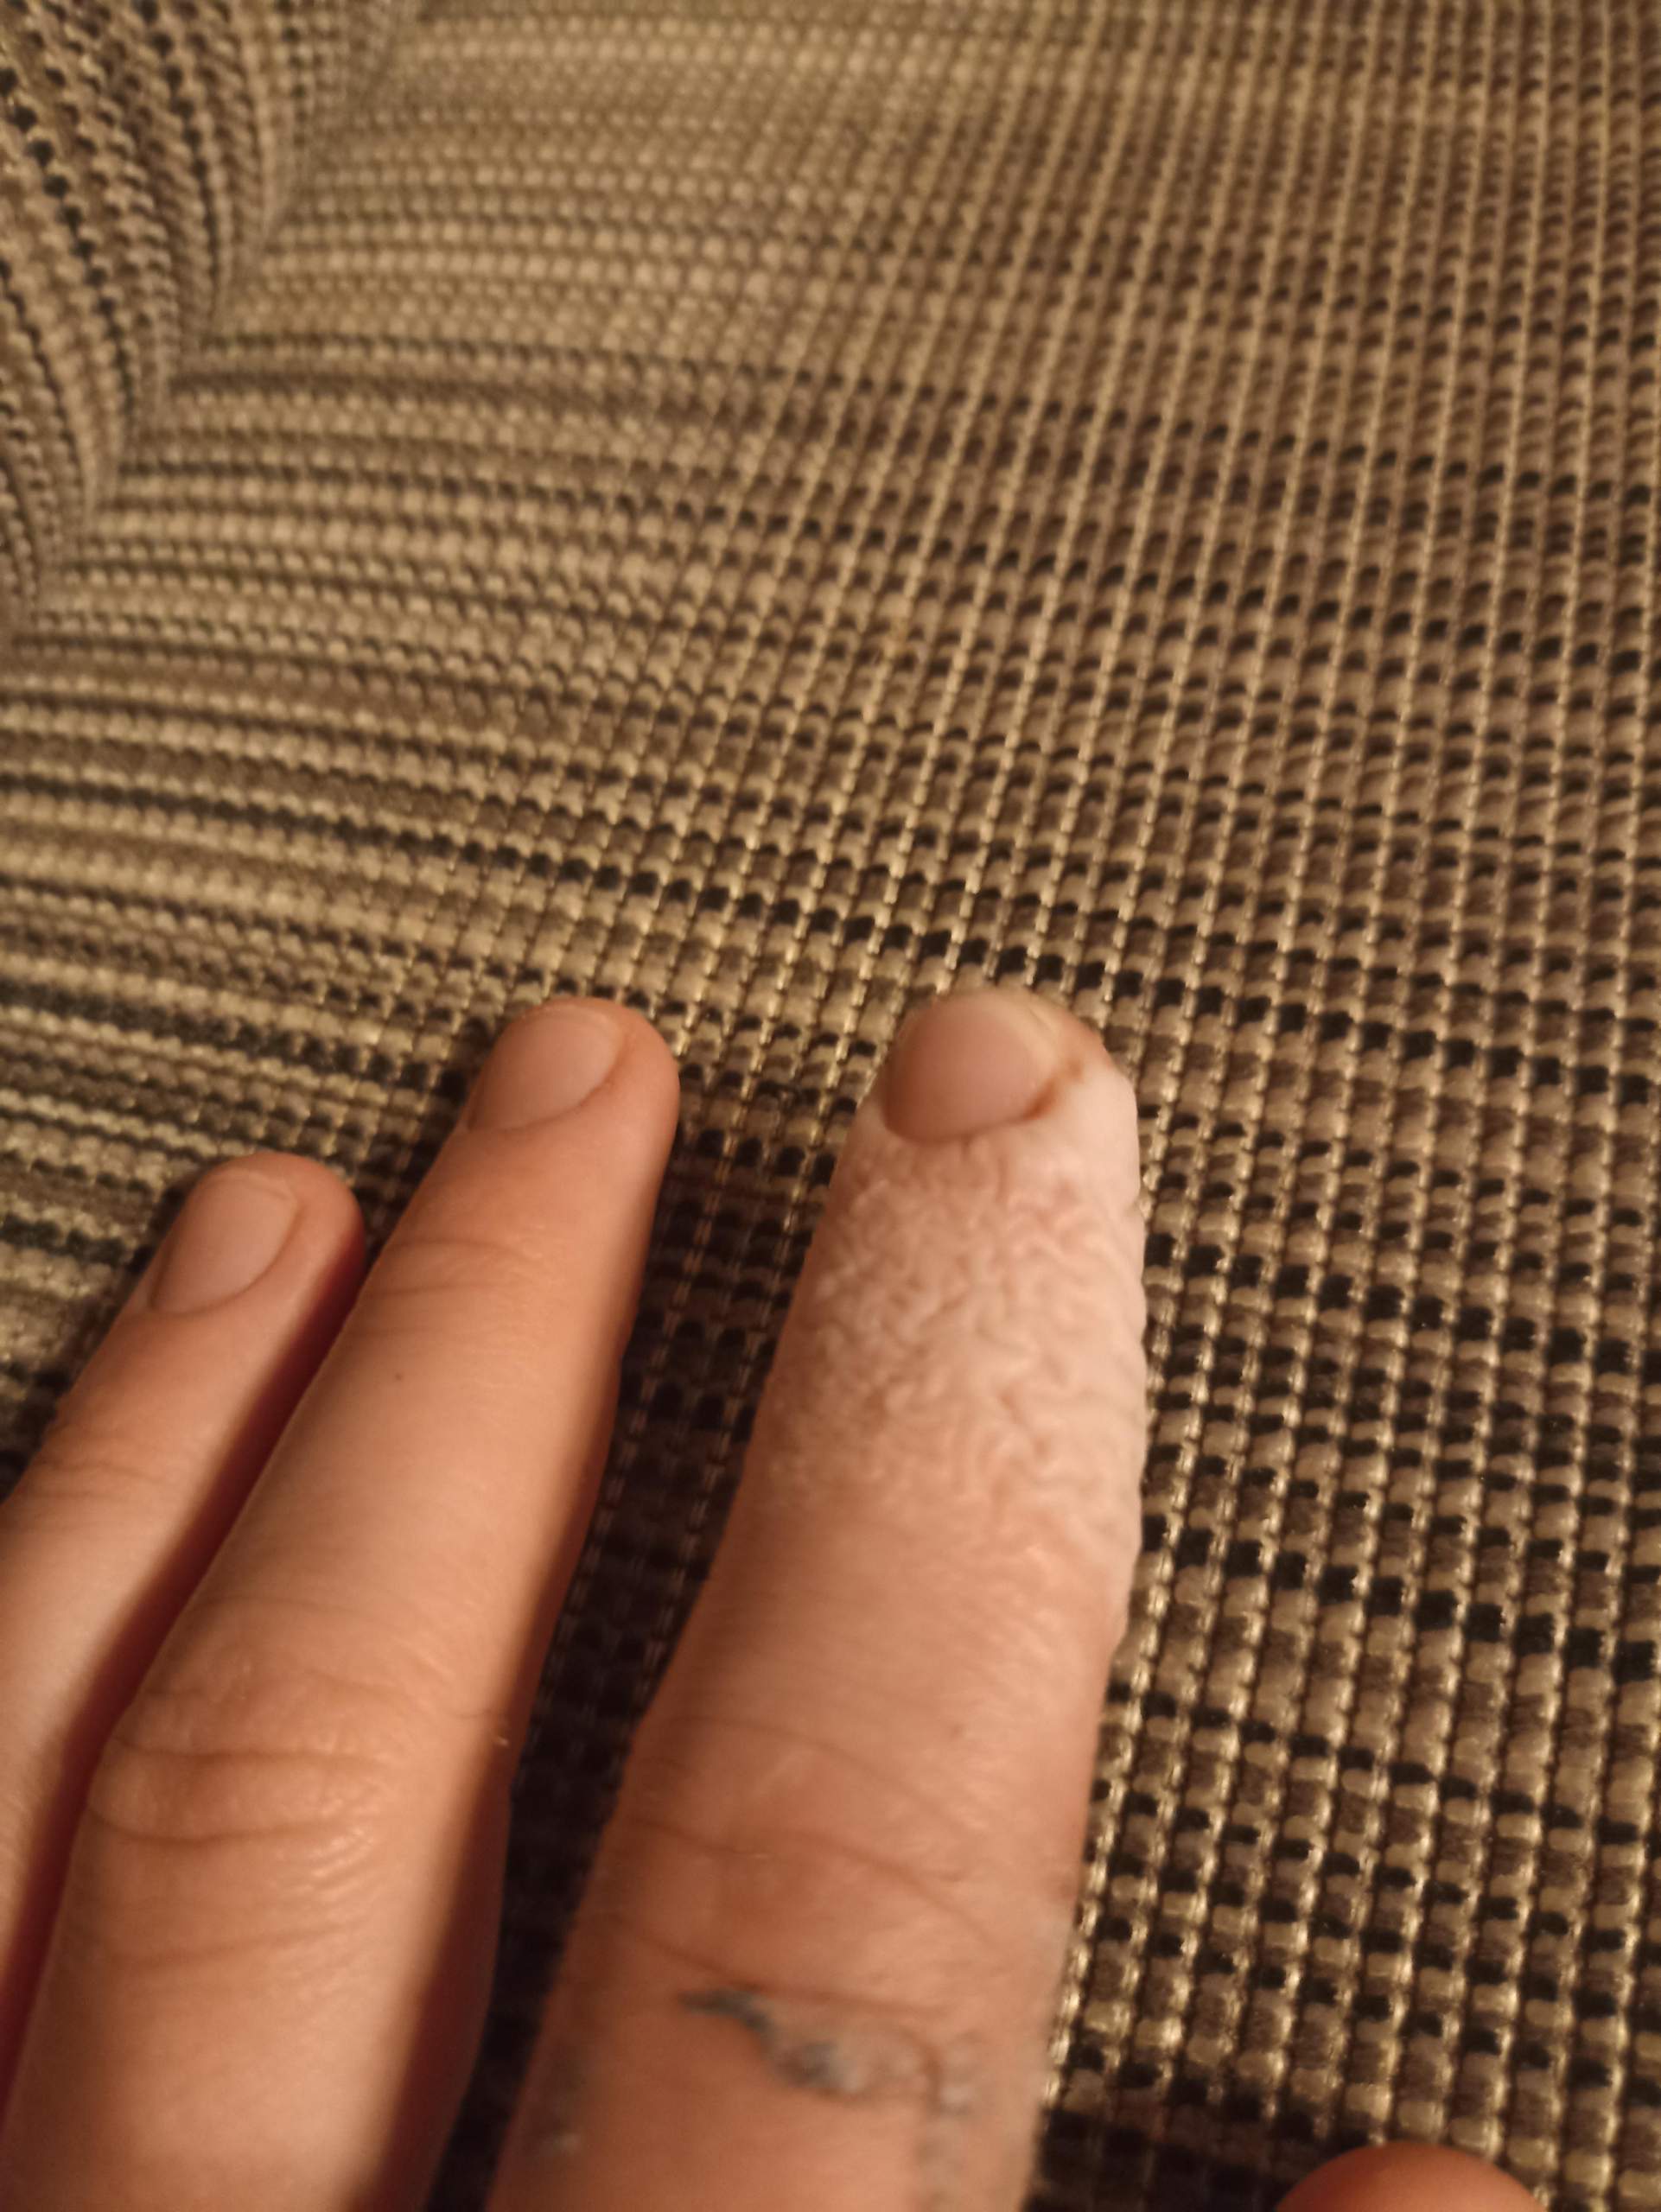 Verheilt mein Finger wieder normal? (Körper, Haut, Hand)